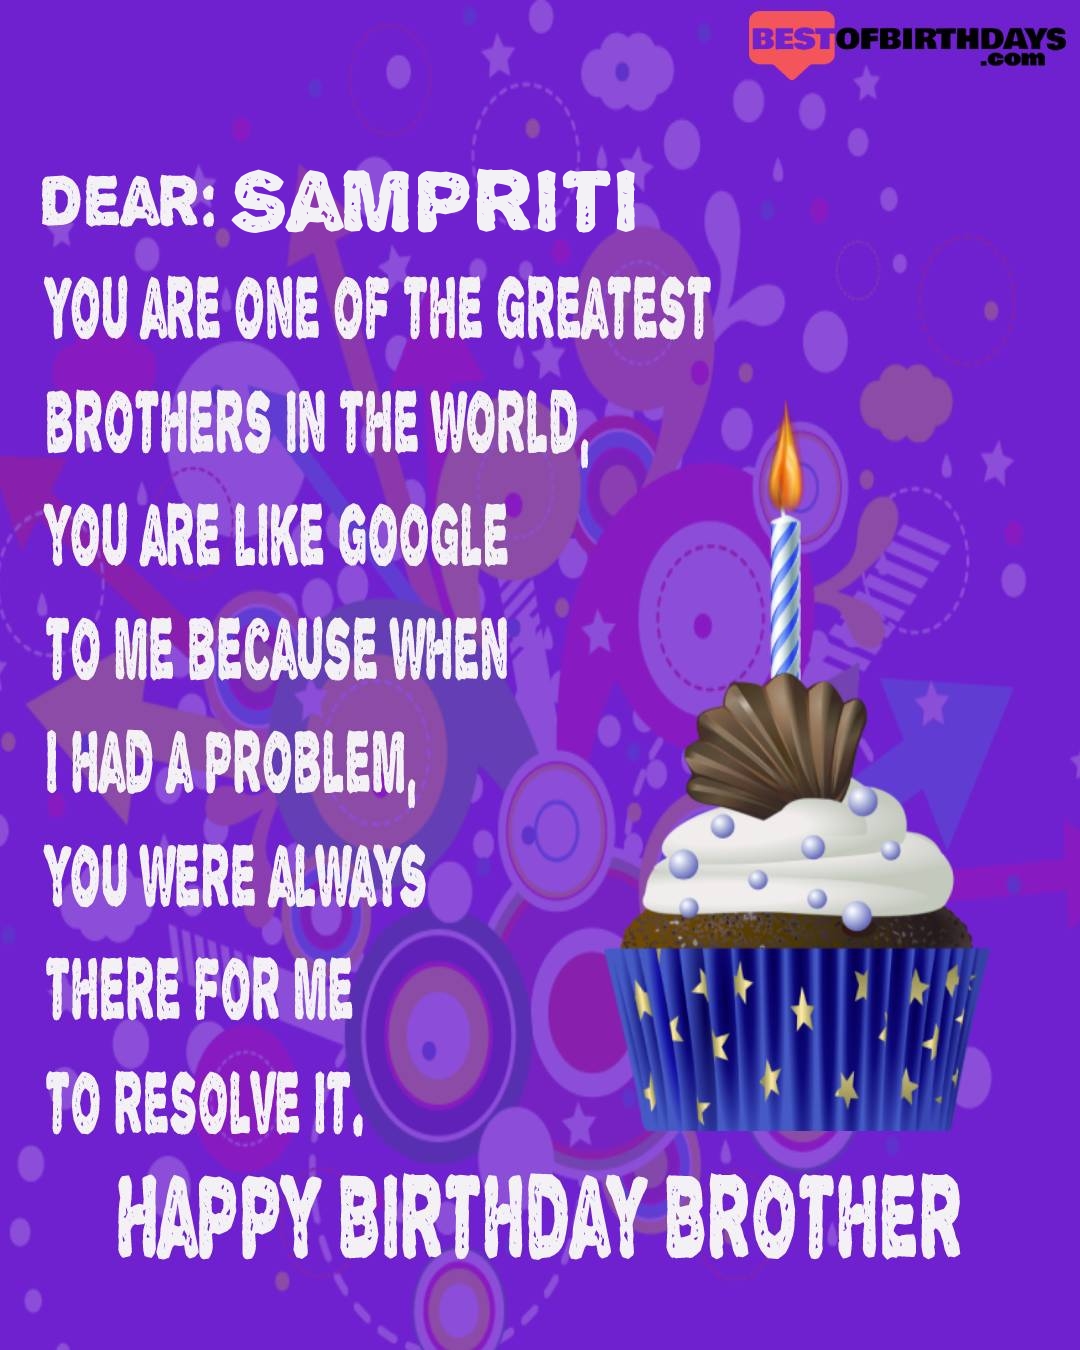 Happy birthday sampriti bhai brother bro